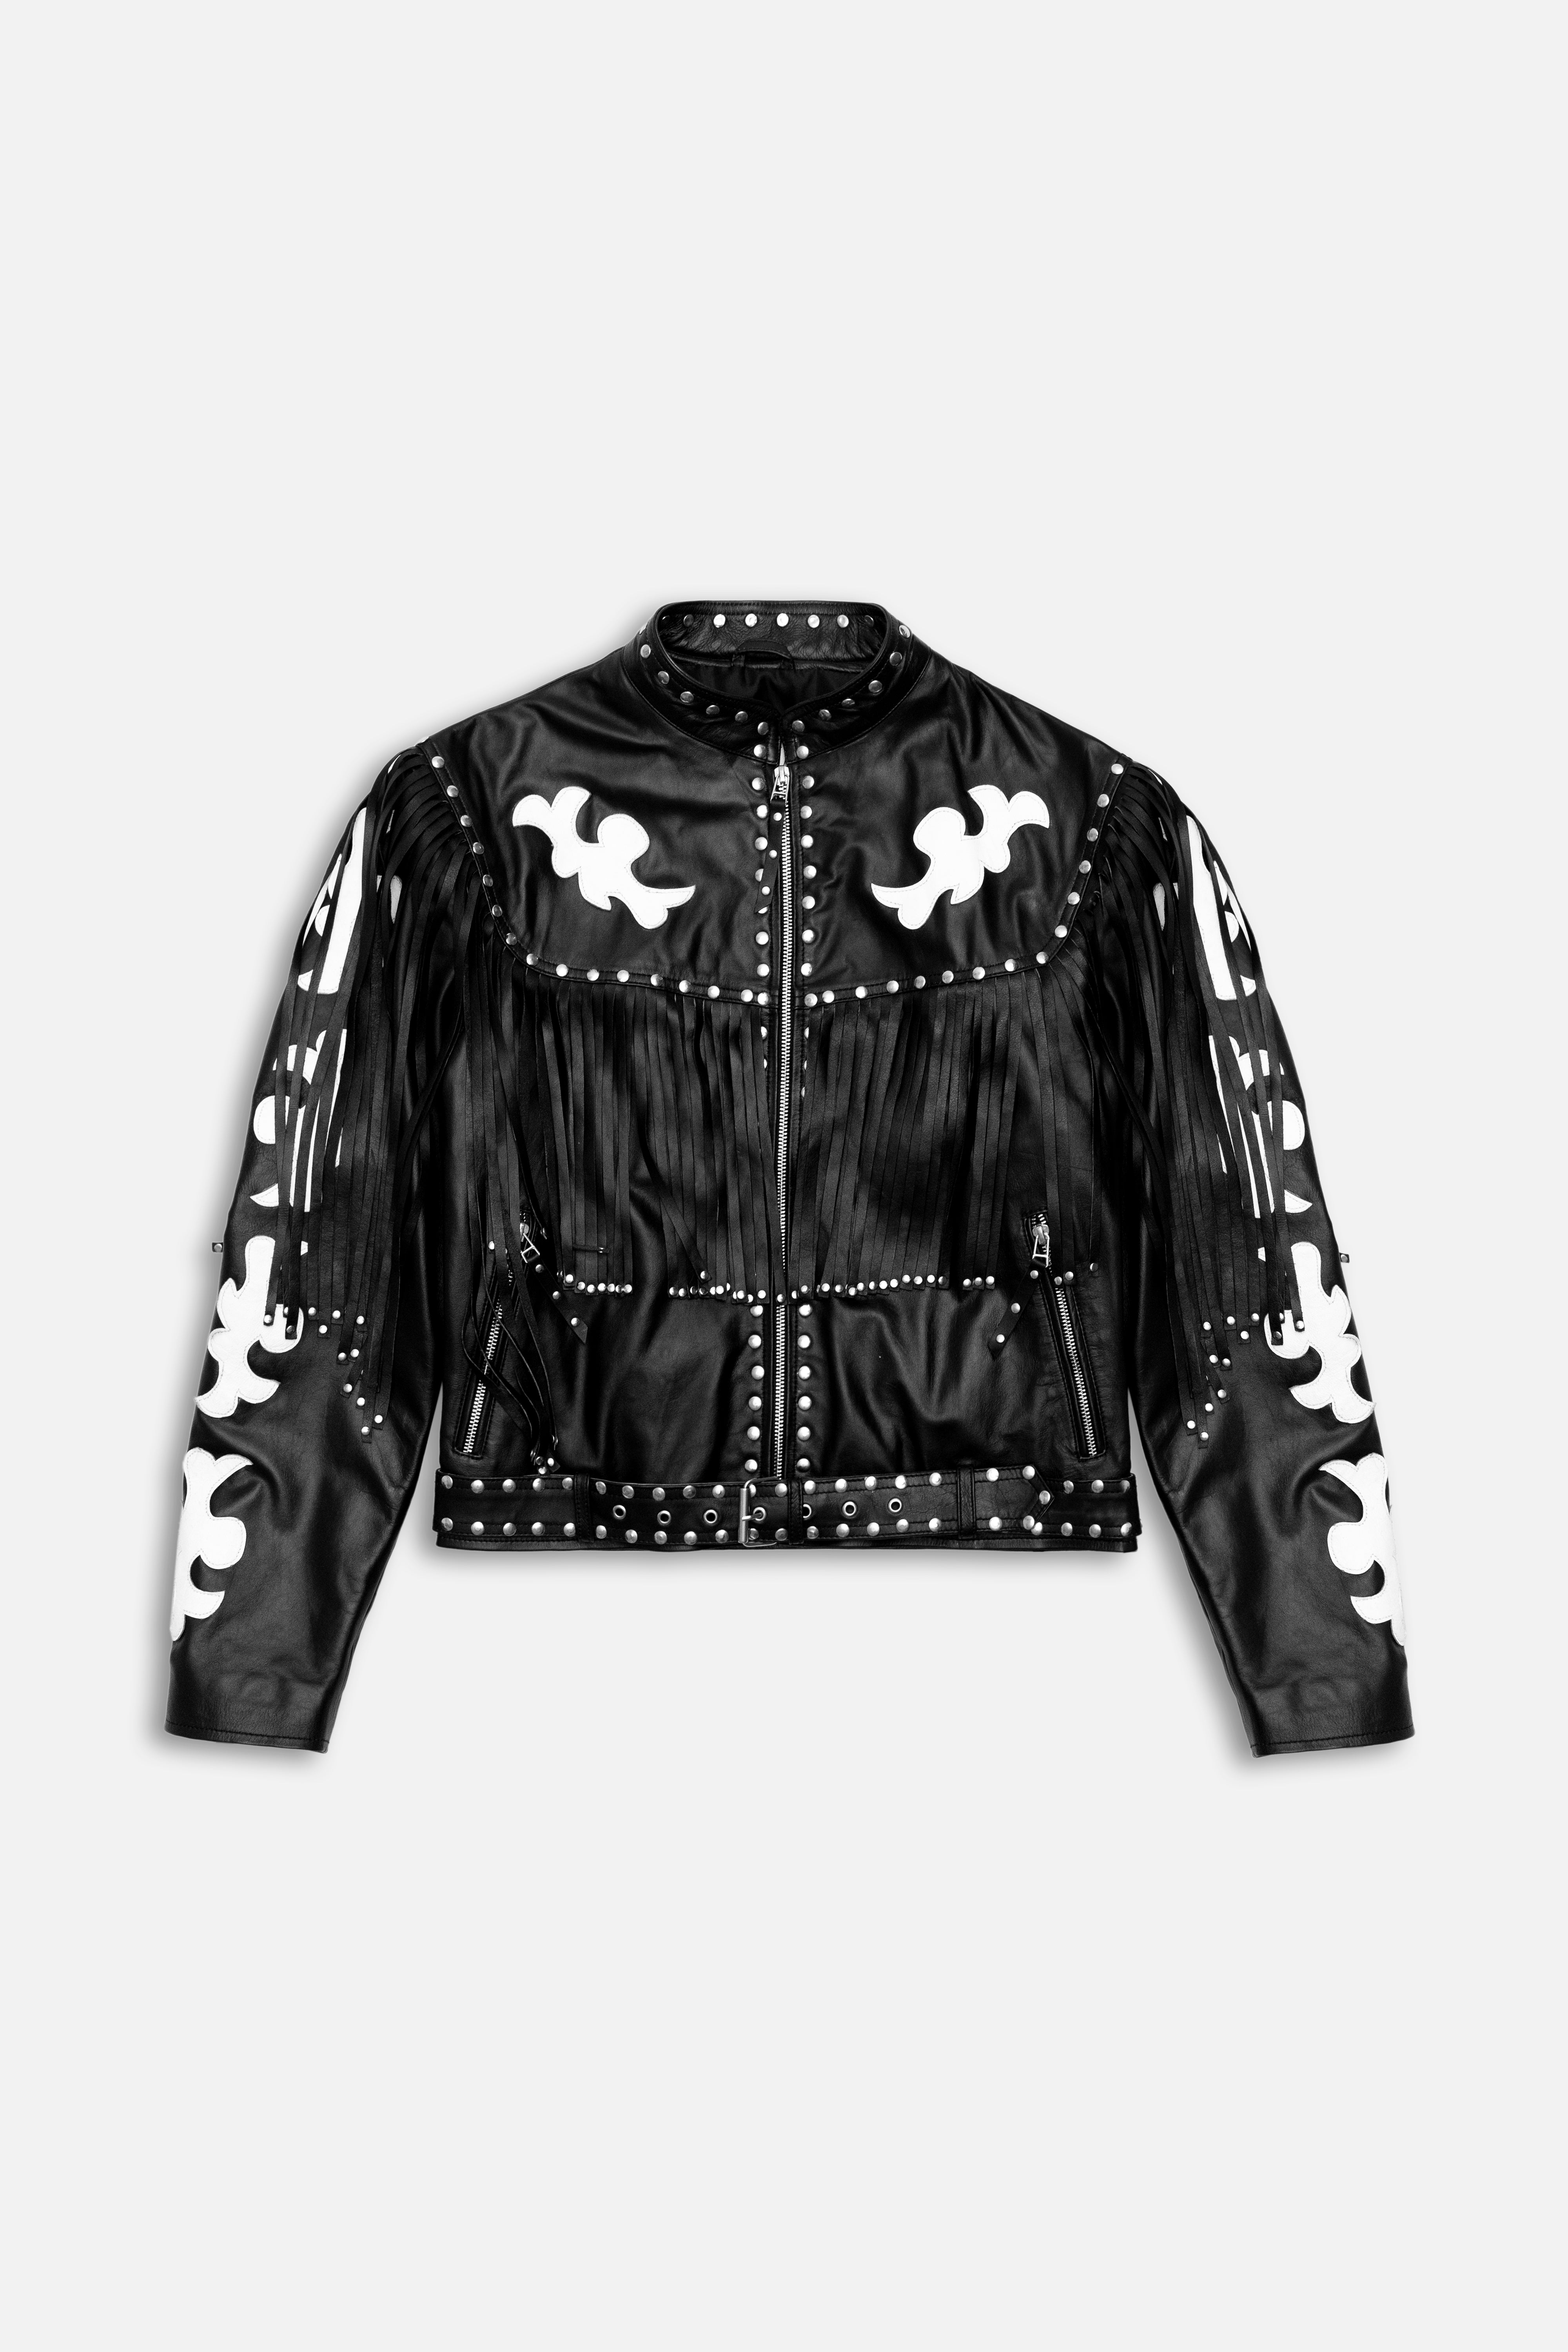 “Equinox Wrangler” Leather Jacket